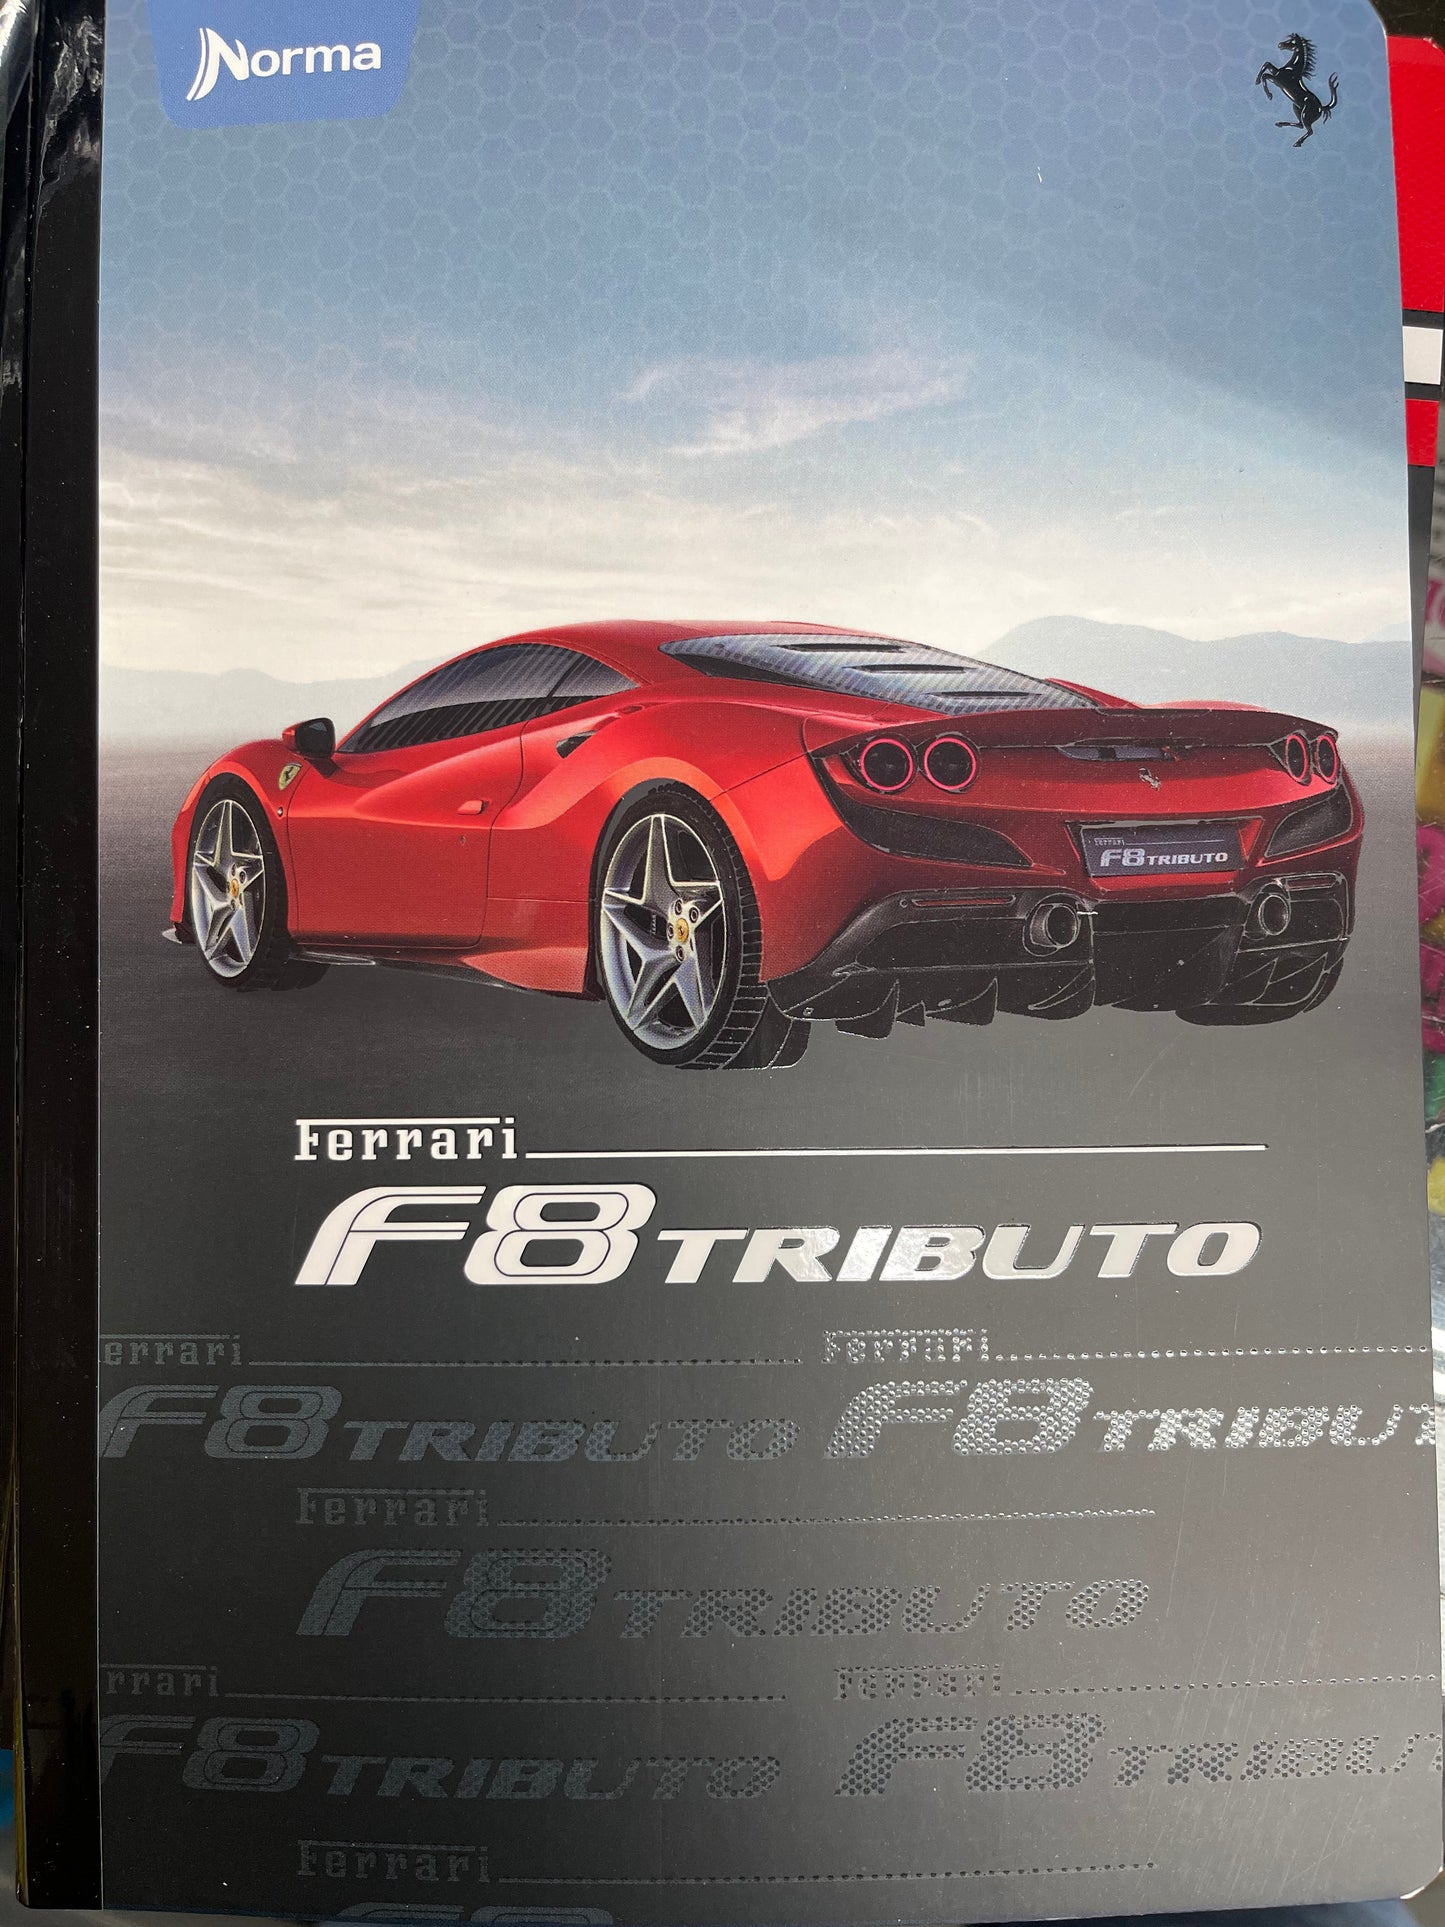 Dura Book Ferrari [200 pgs]